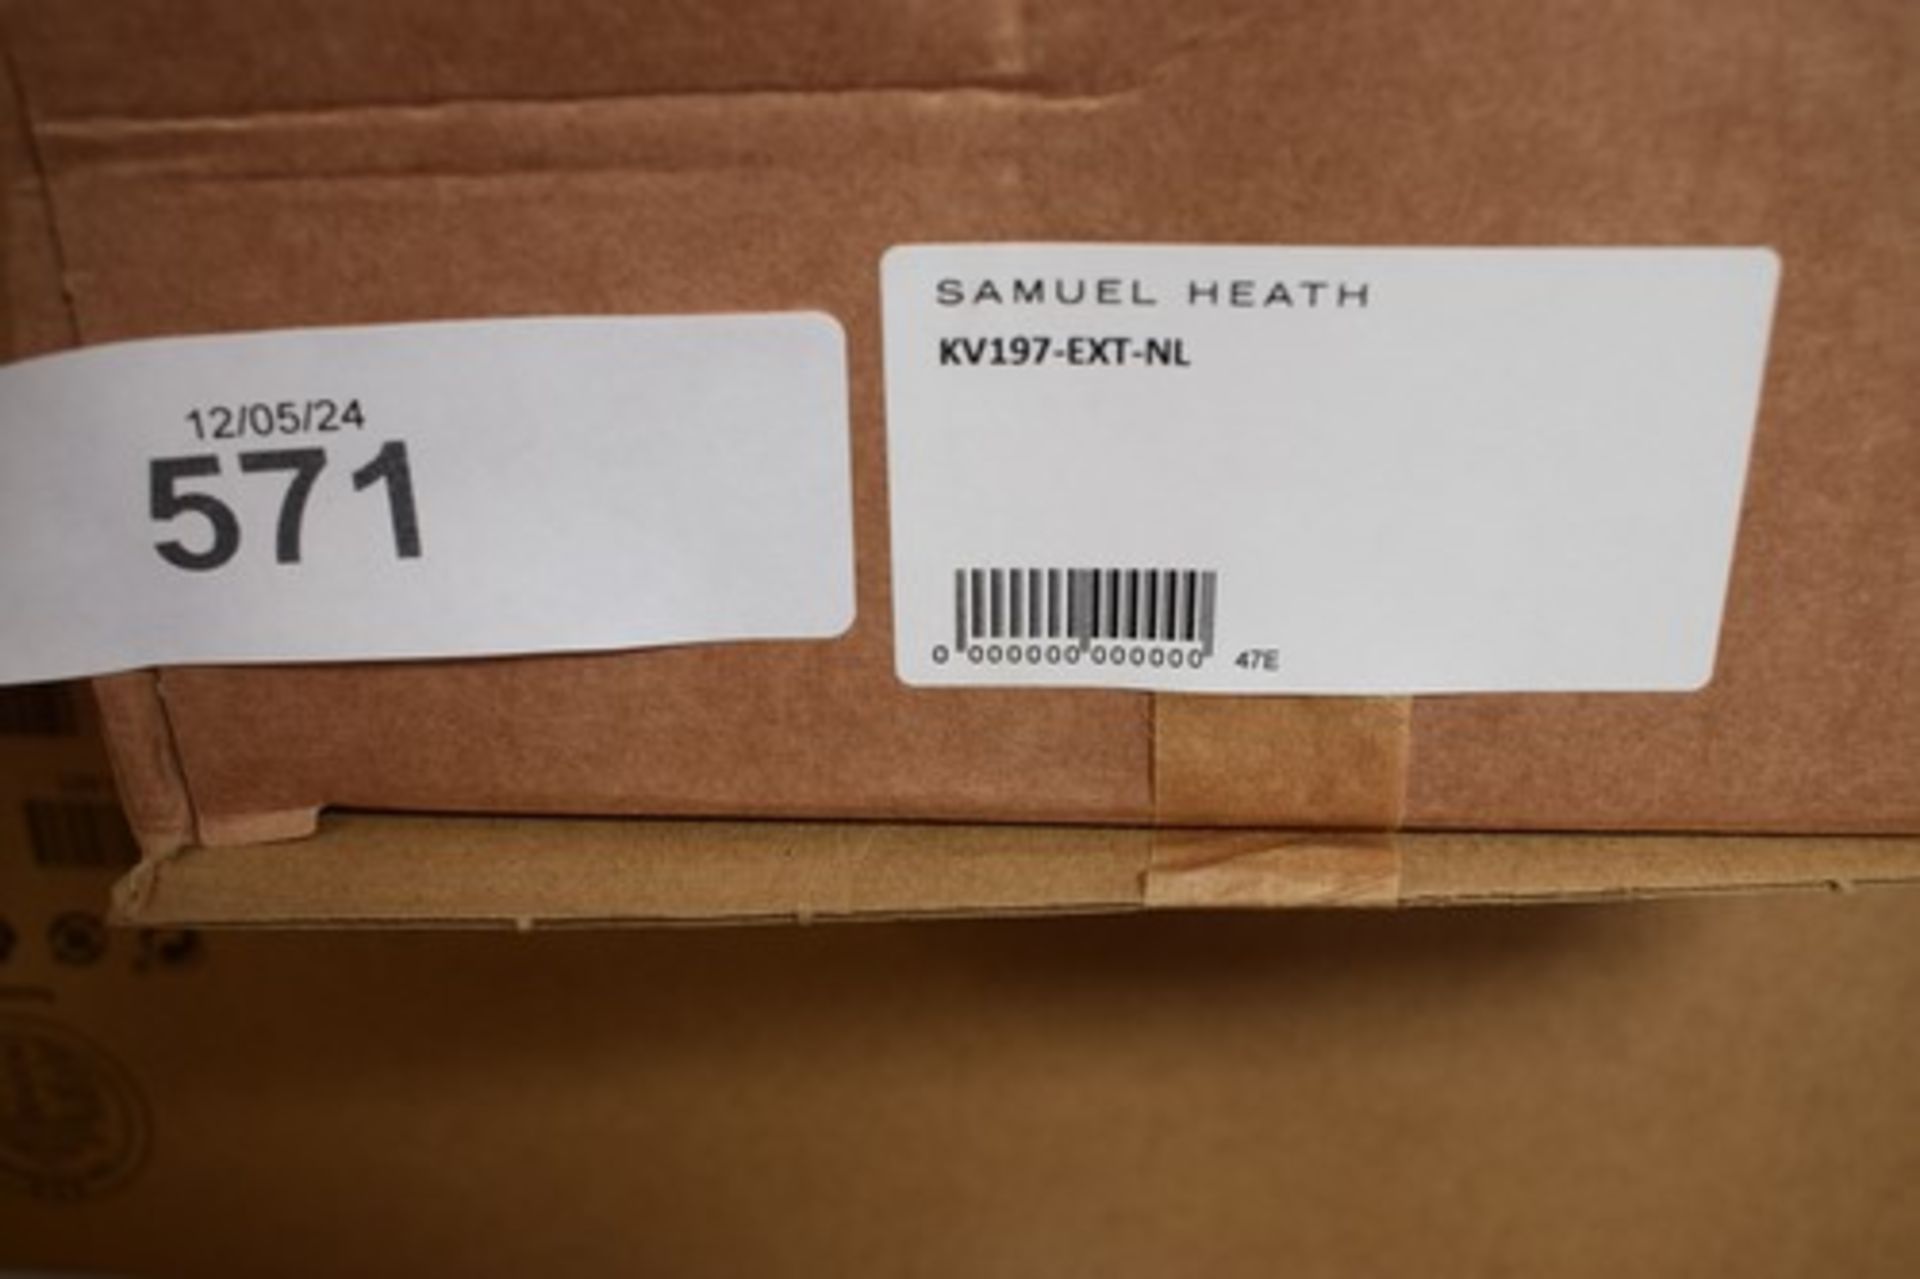 1 x Samuel Heath trap units, Model KV197-EXT-NL - New (G6)